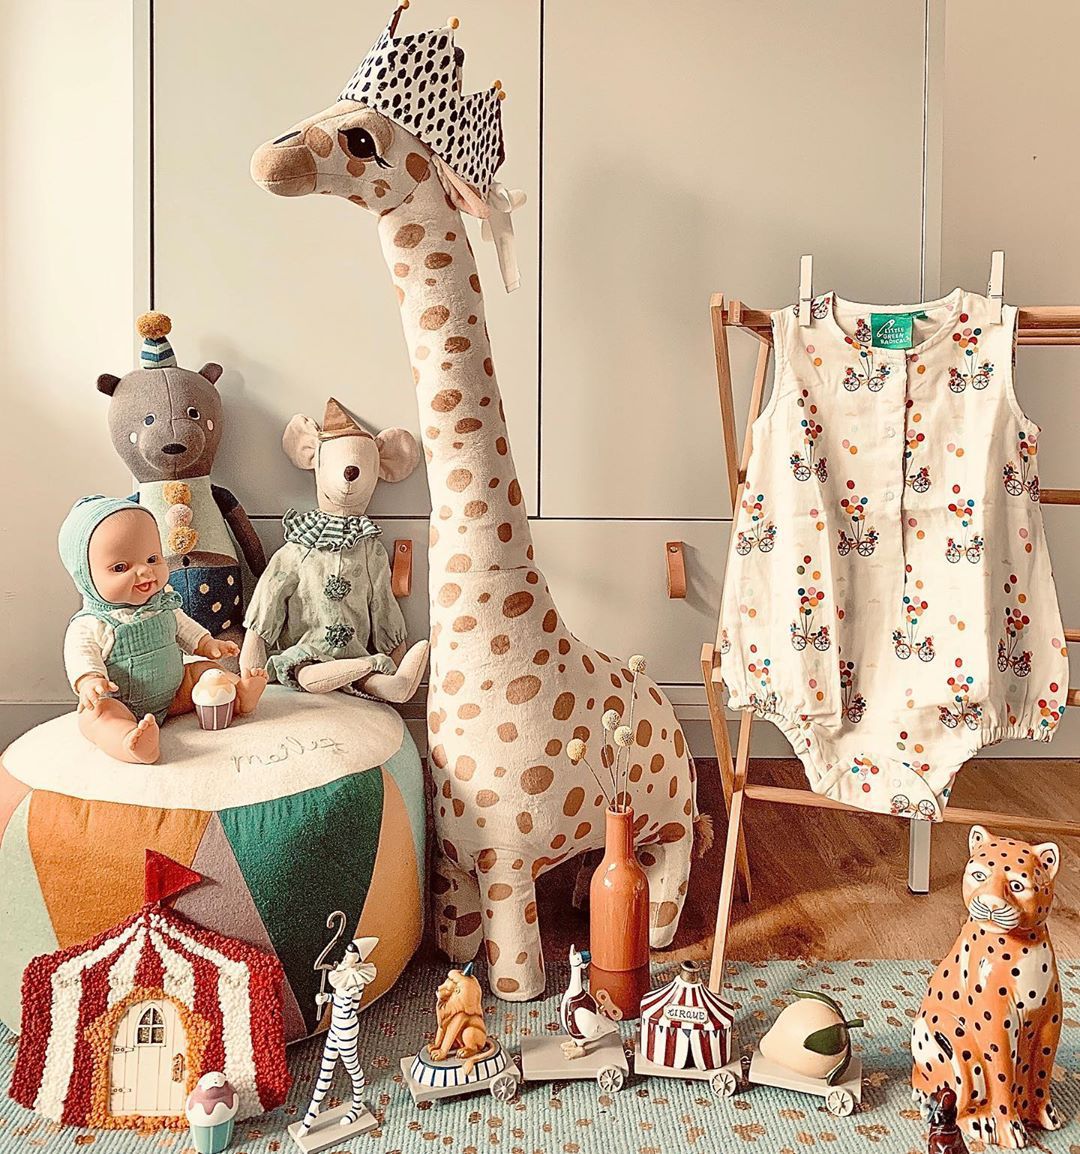 67cm Big Size Simulation Giraffe Plush Toys Soft Stuffed Animal Giraffe Sleeping Doll Toy For Boys Girls Birthday Gift Kids Toy